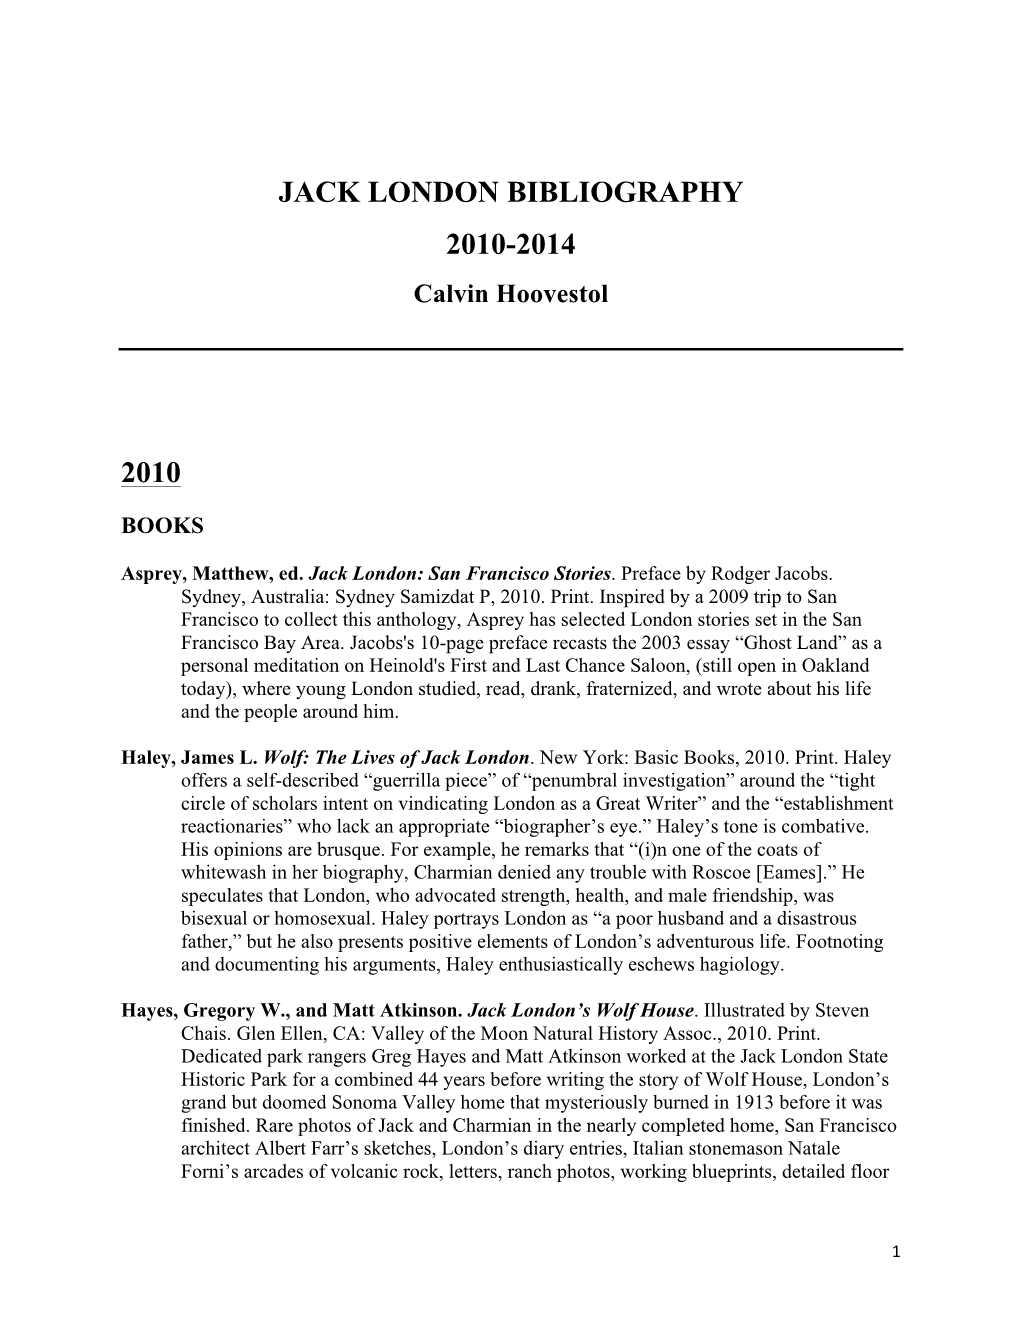 Jack London Bibliography 2010-2014 2010